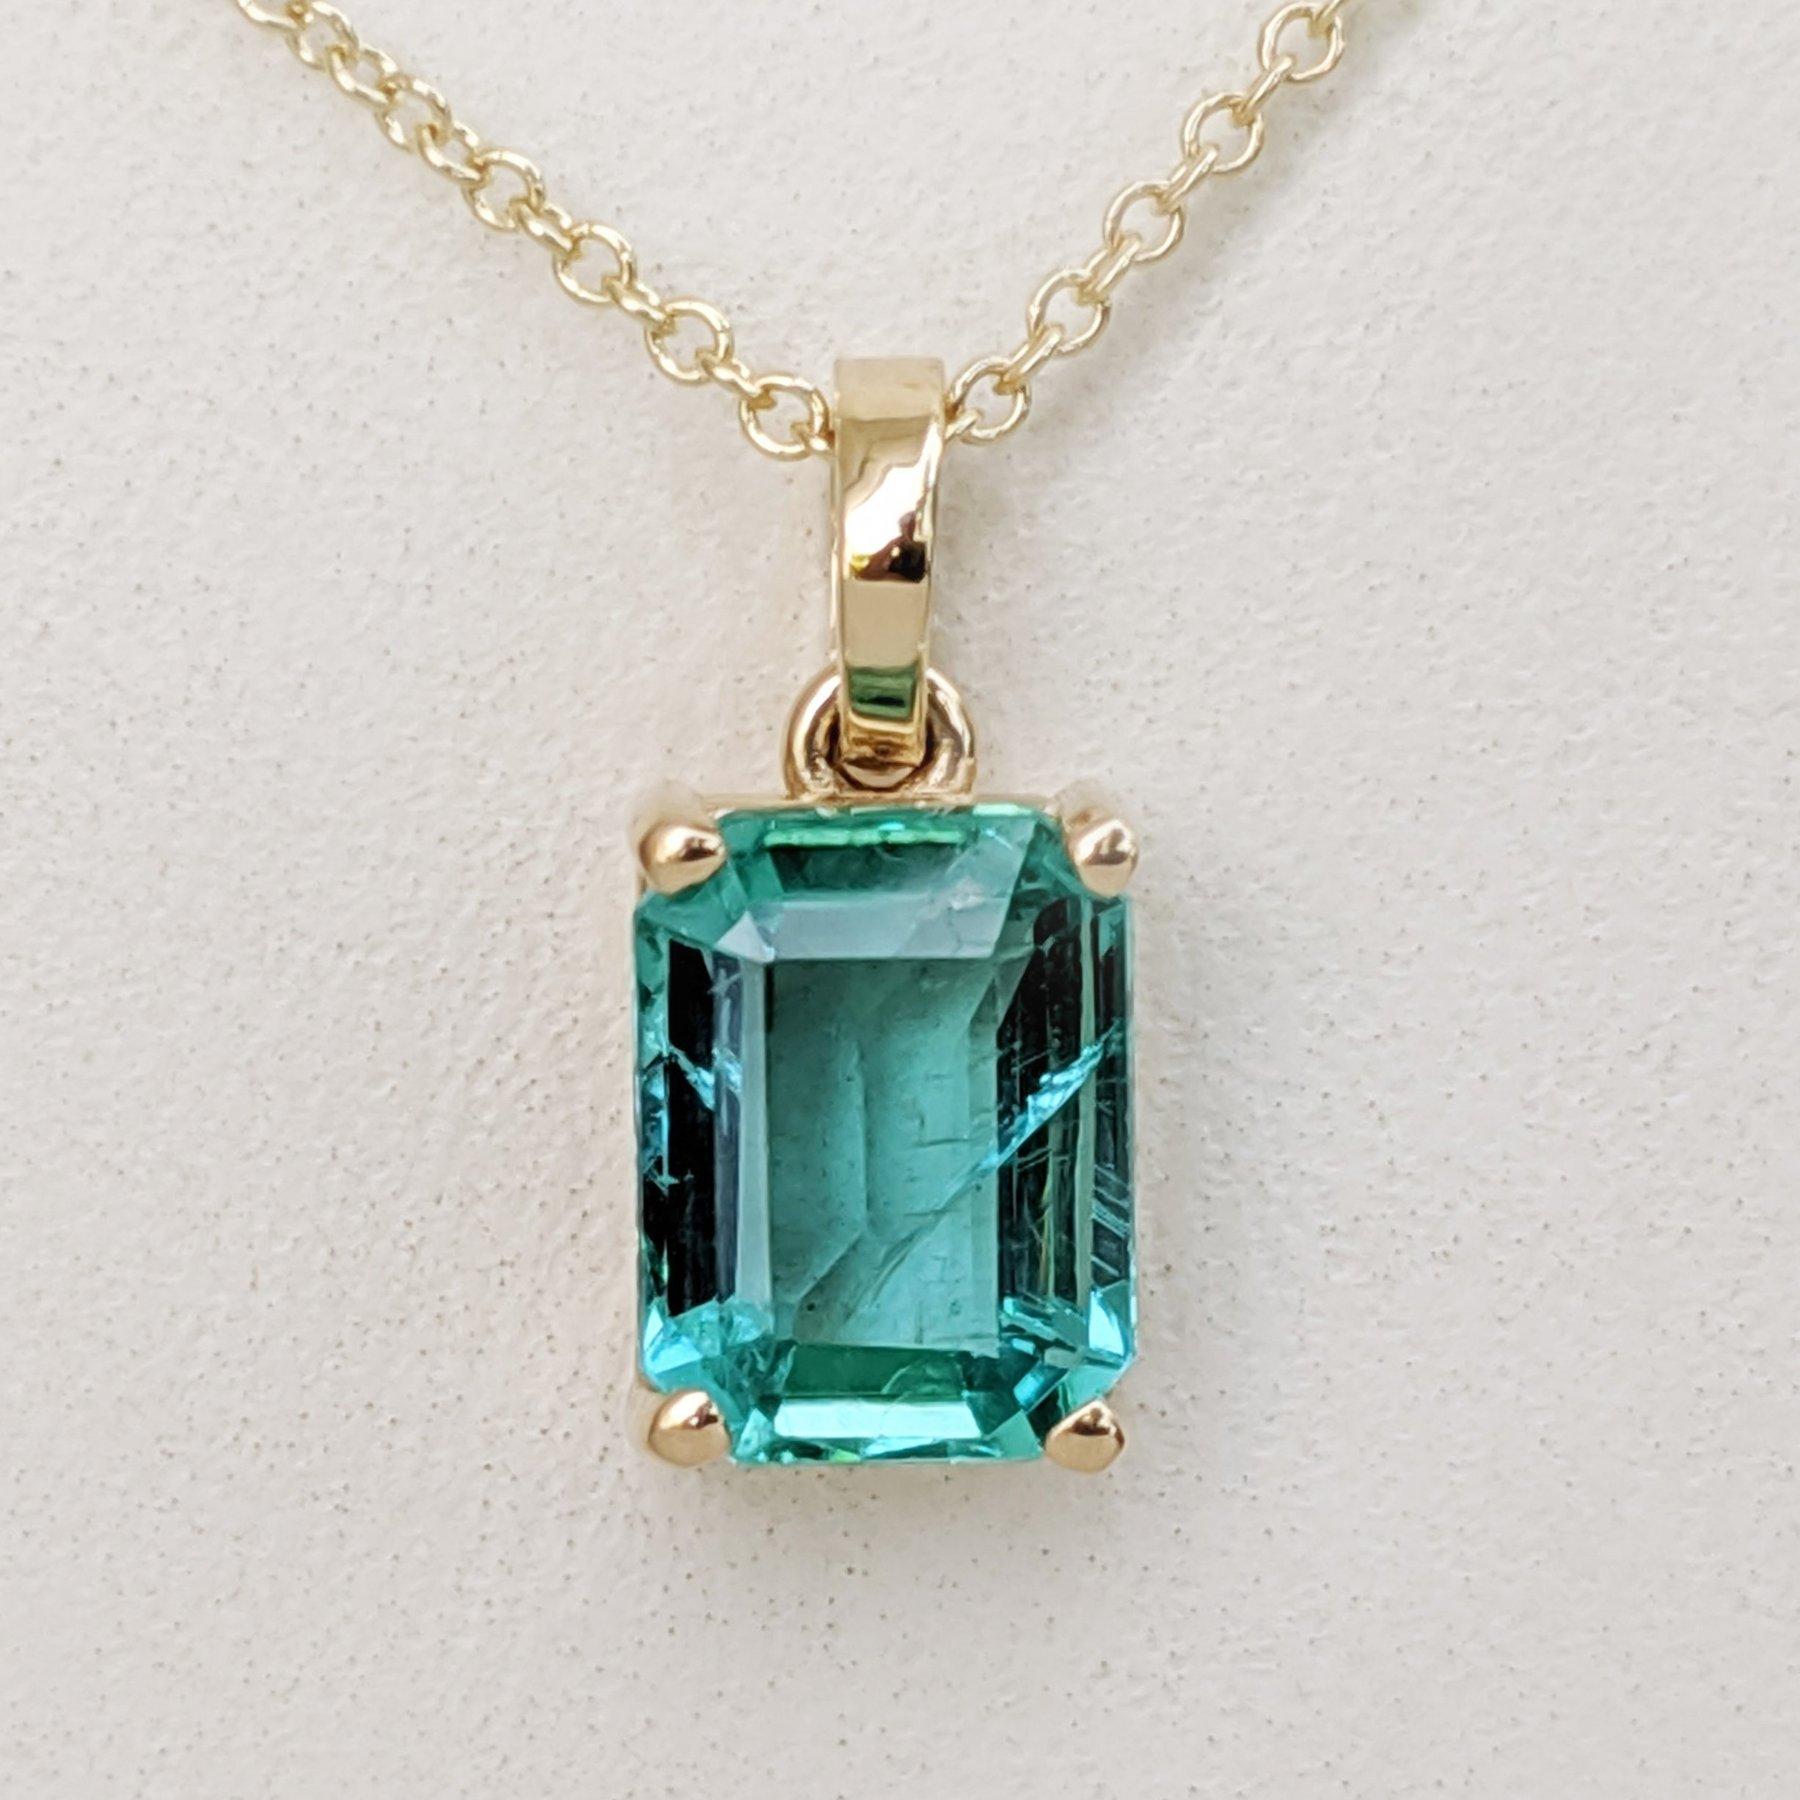 Emerald Cut NO RESERVE! 1.44 Carat Emerald - 14 kt. Gold - Pendant Necklace For Sale